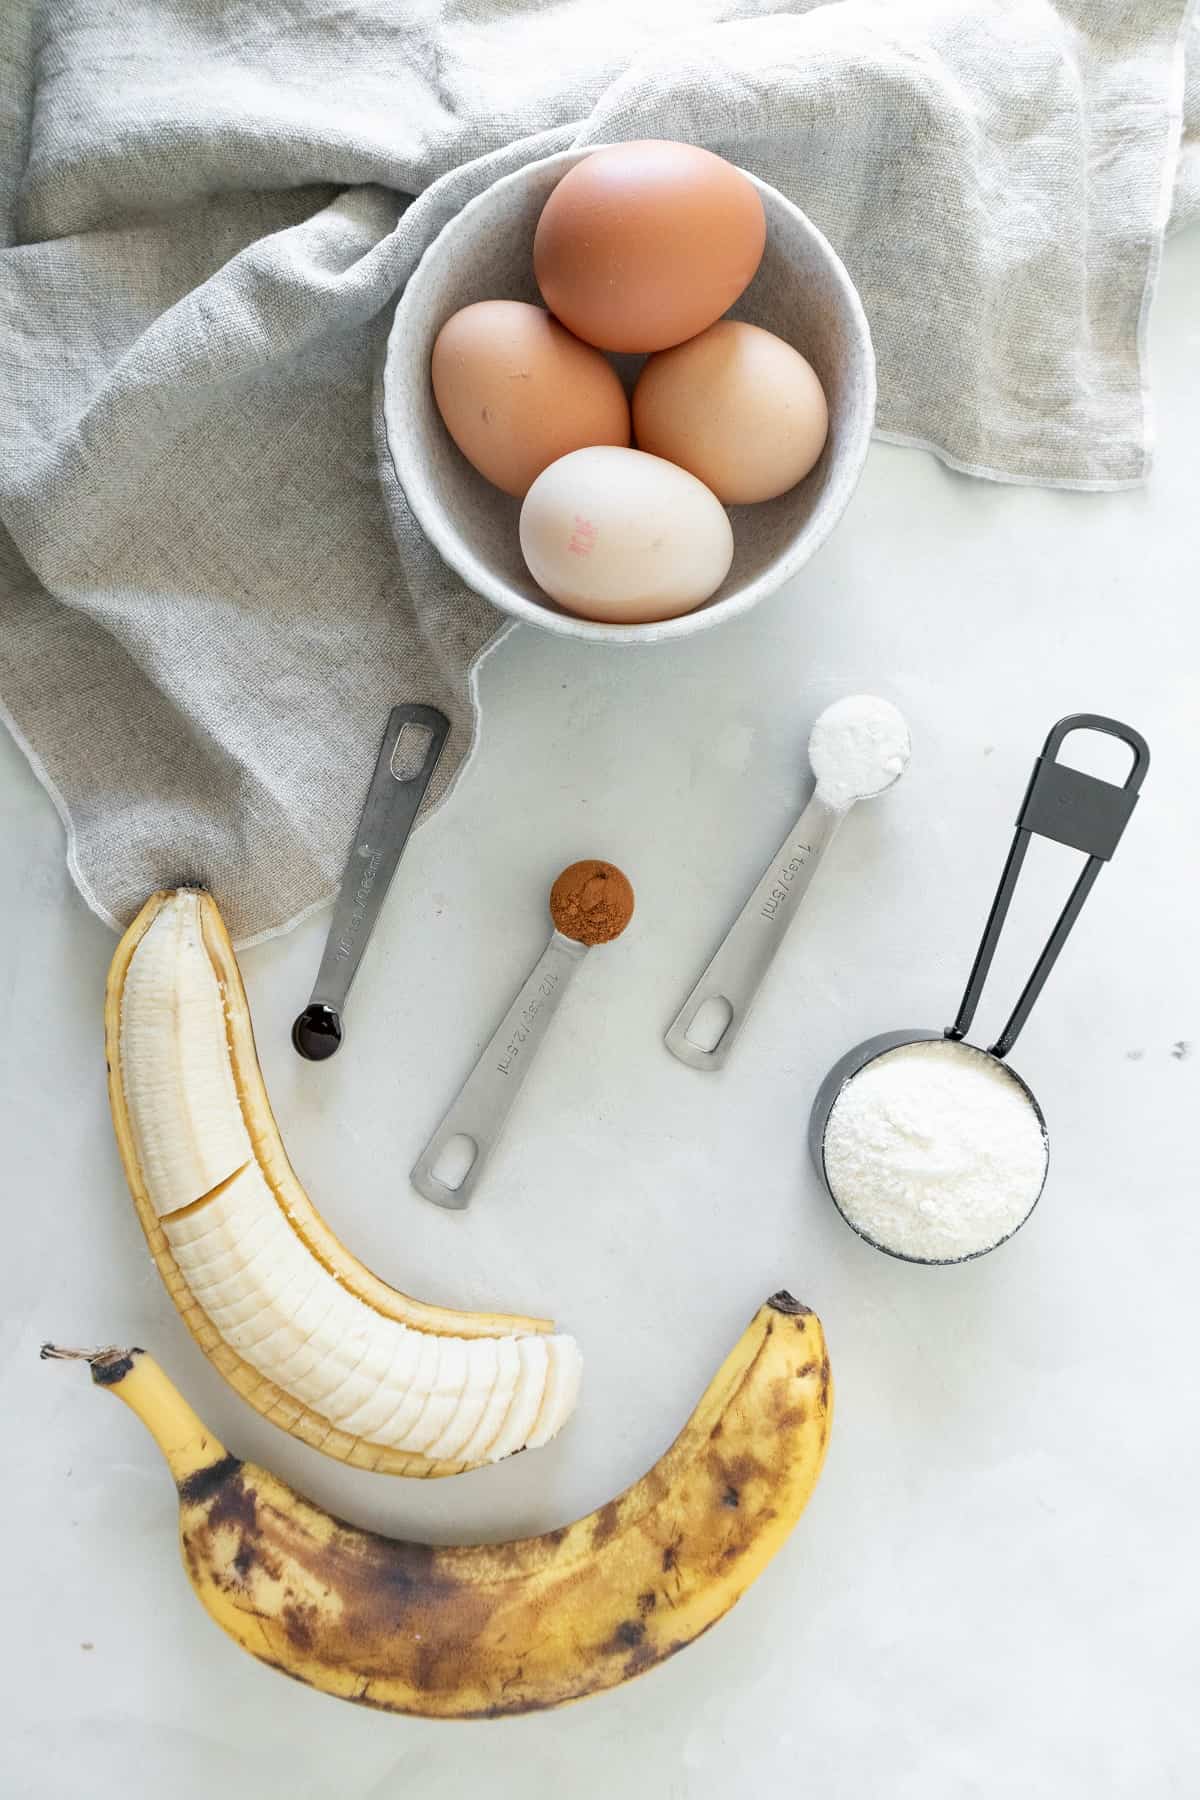 coconut flour banana pancakes ingredients on benchtop